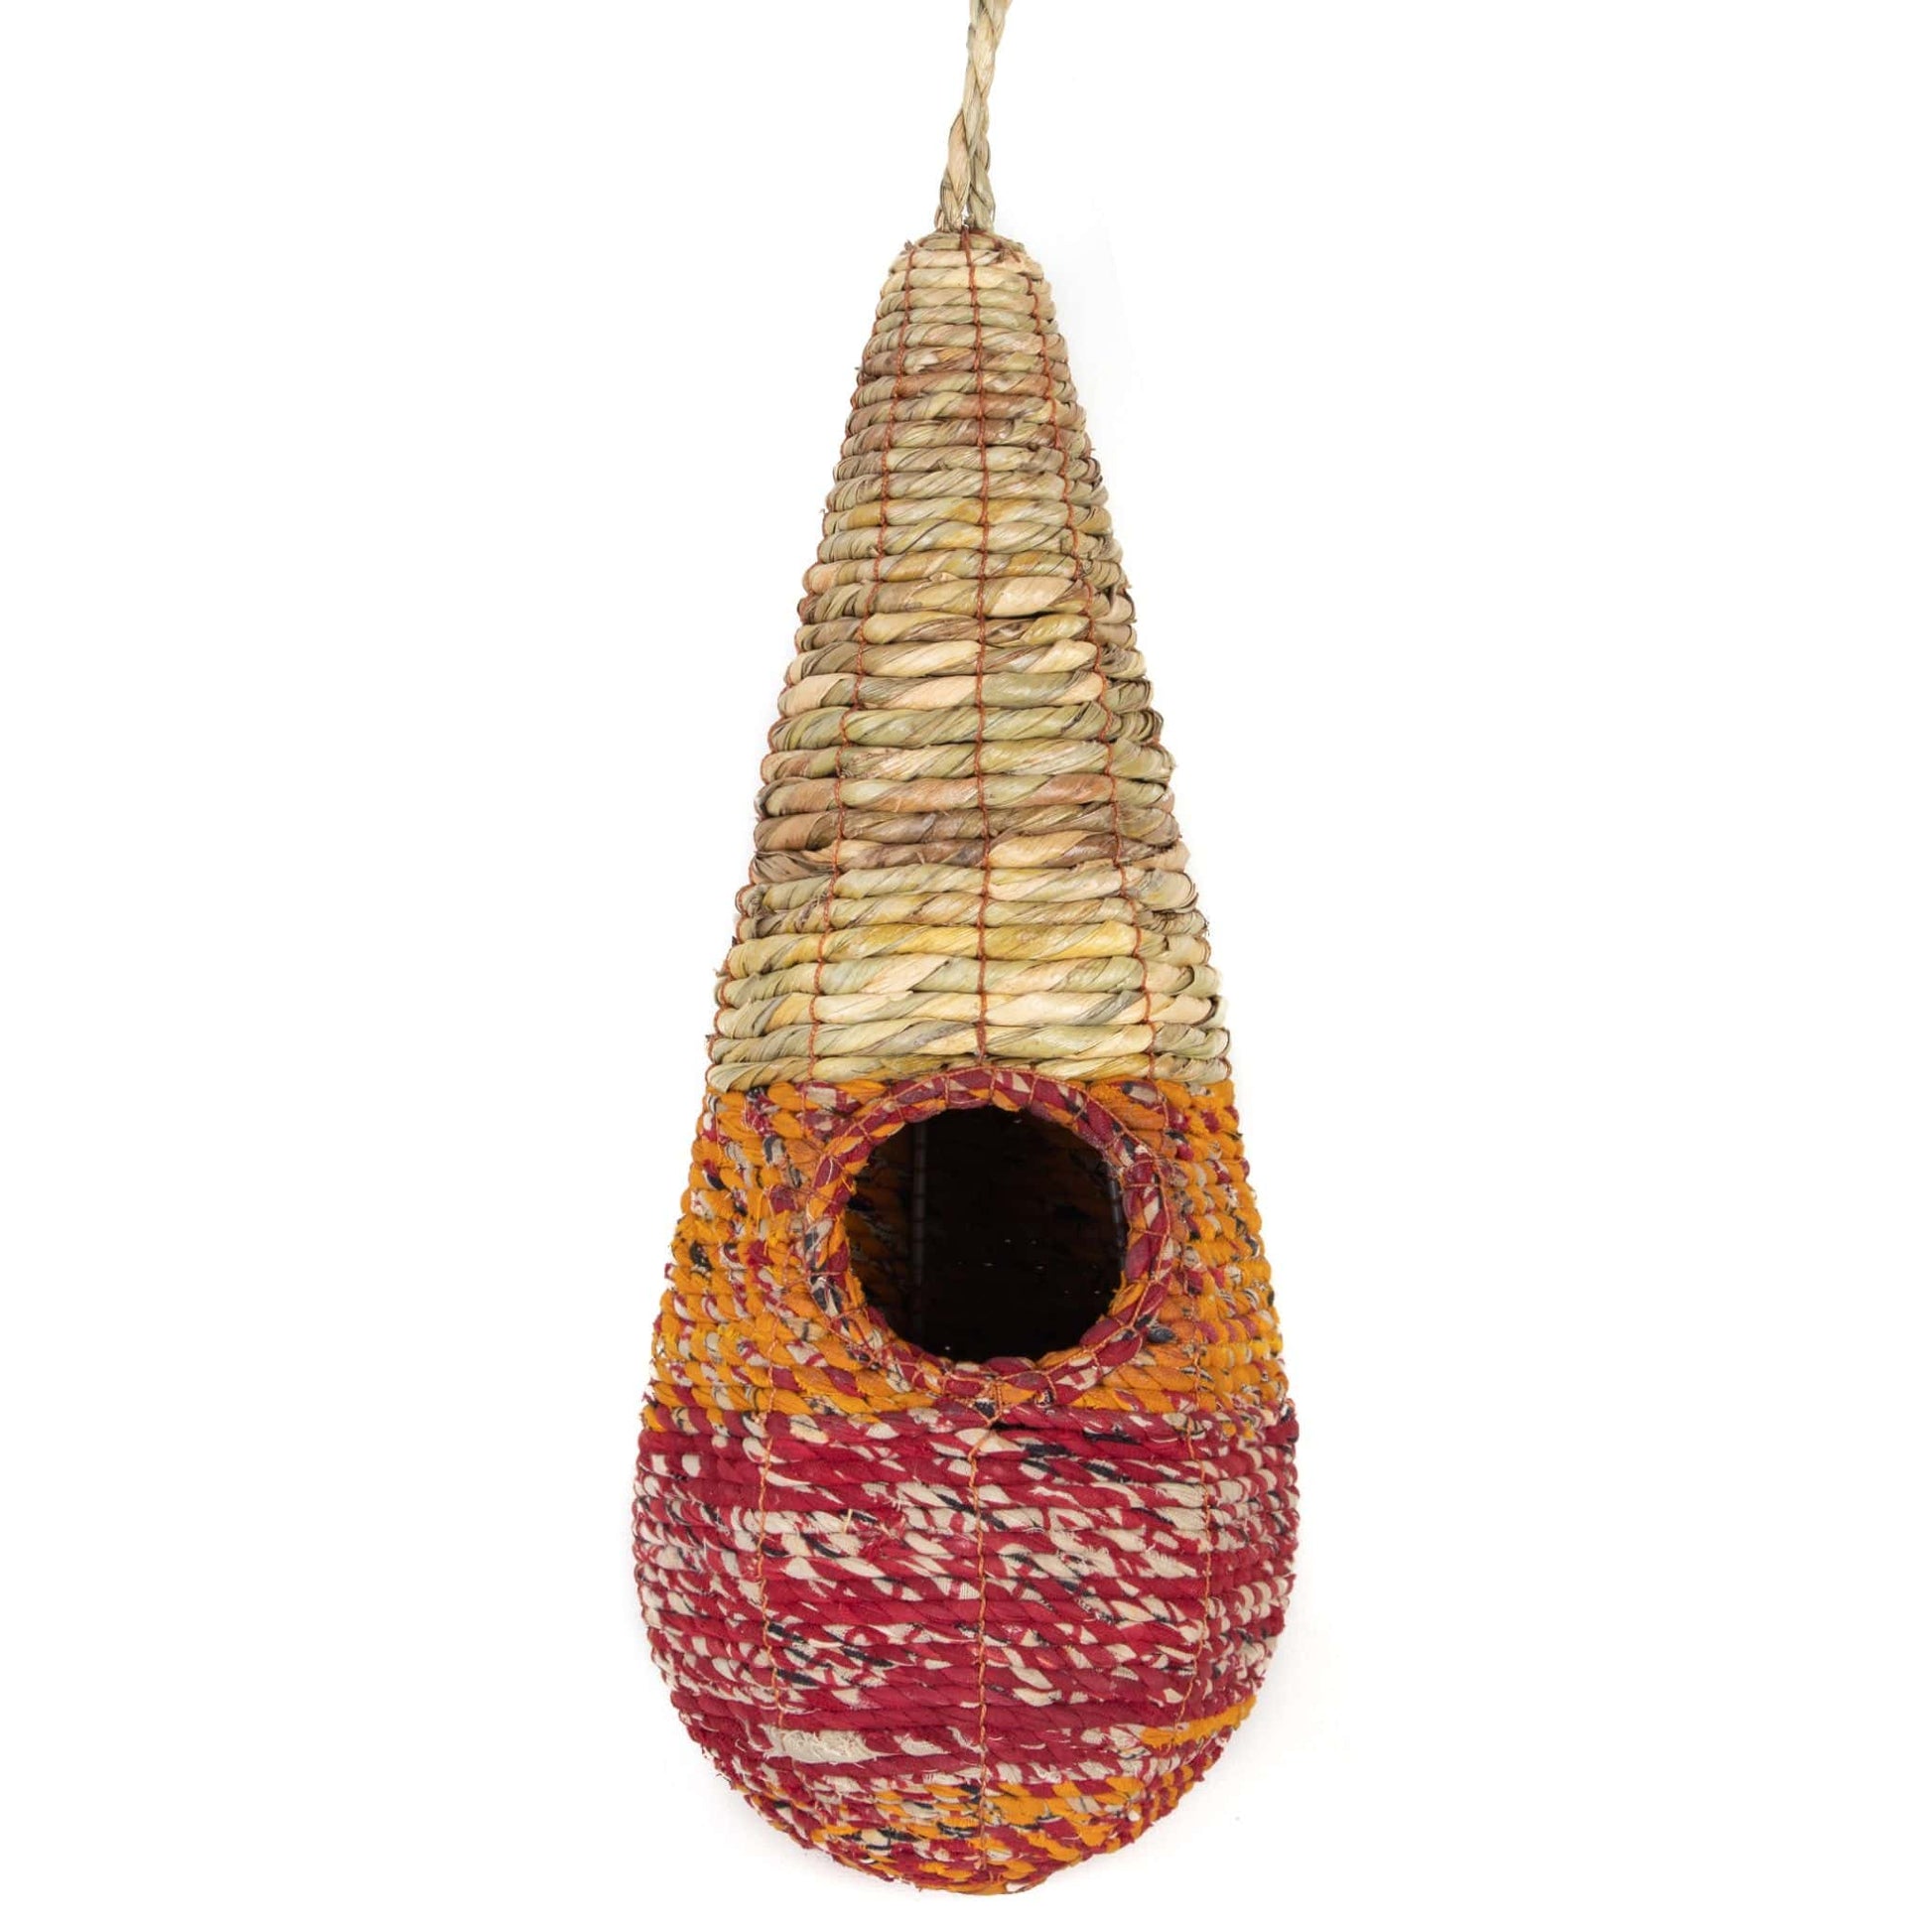 Handmade and Fair Trade Bird Nester wildlife gifts - white background